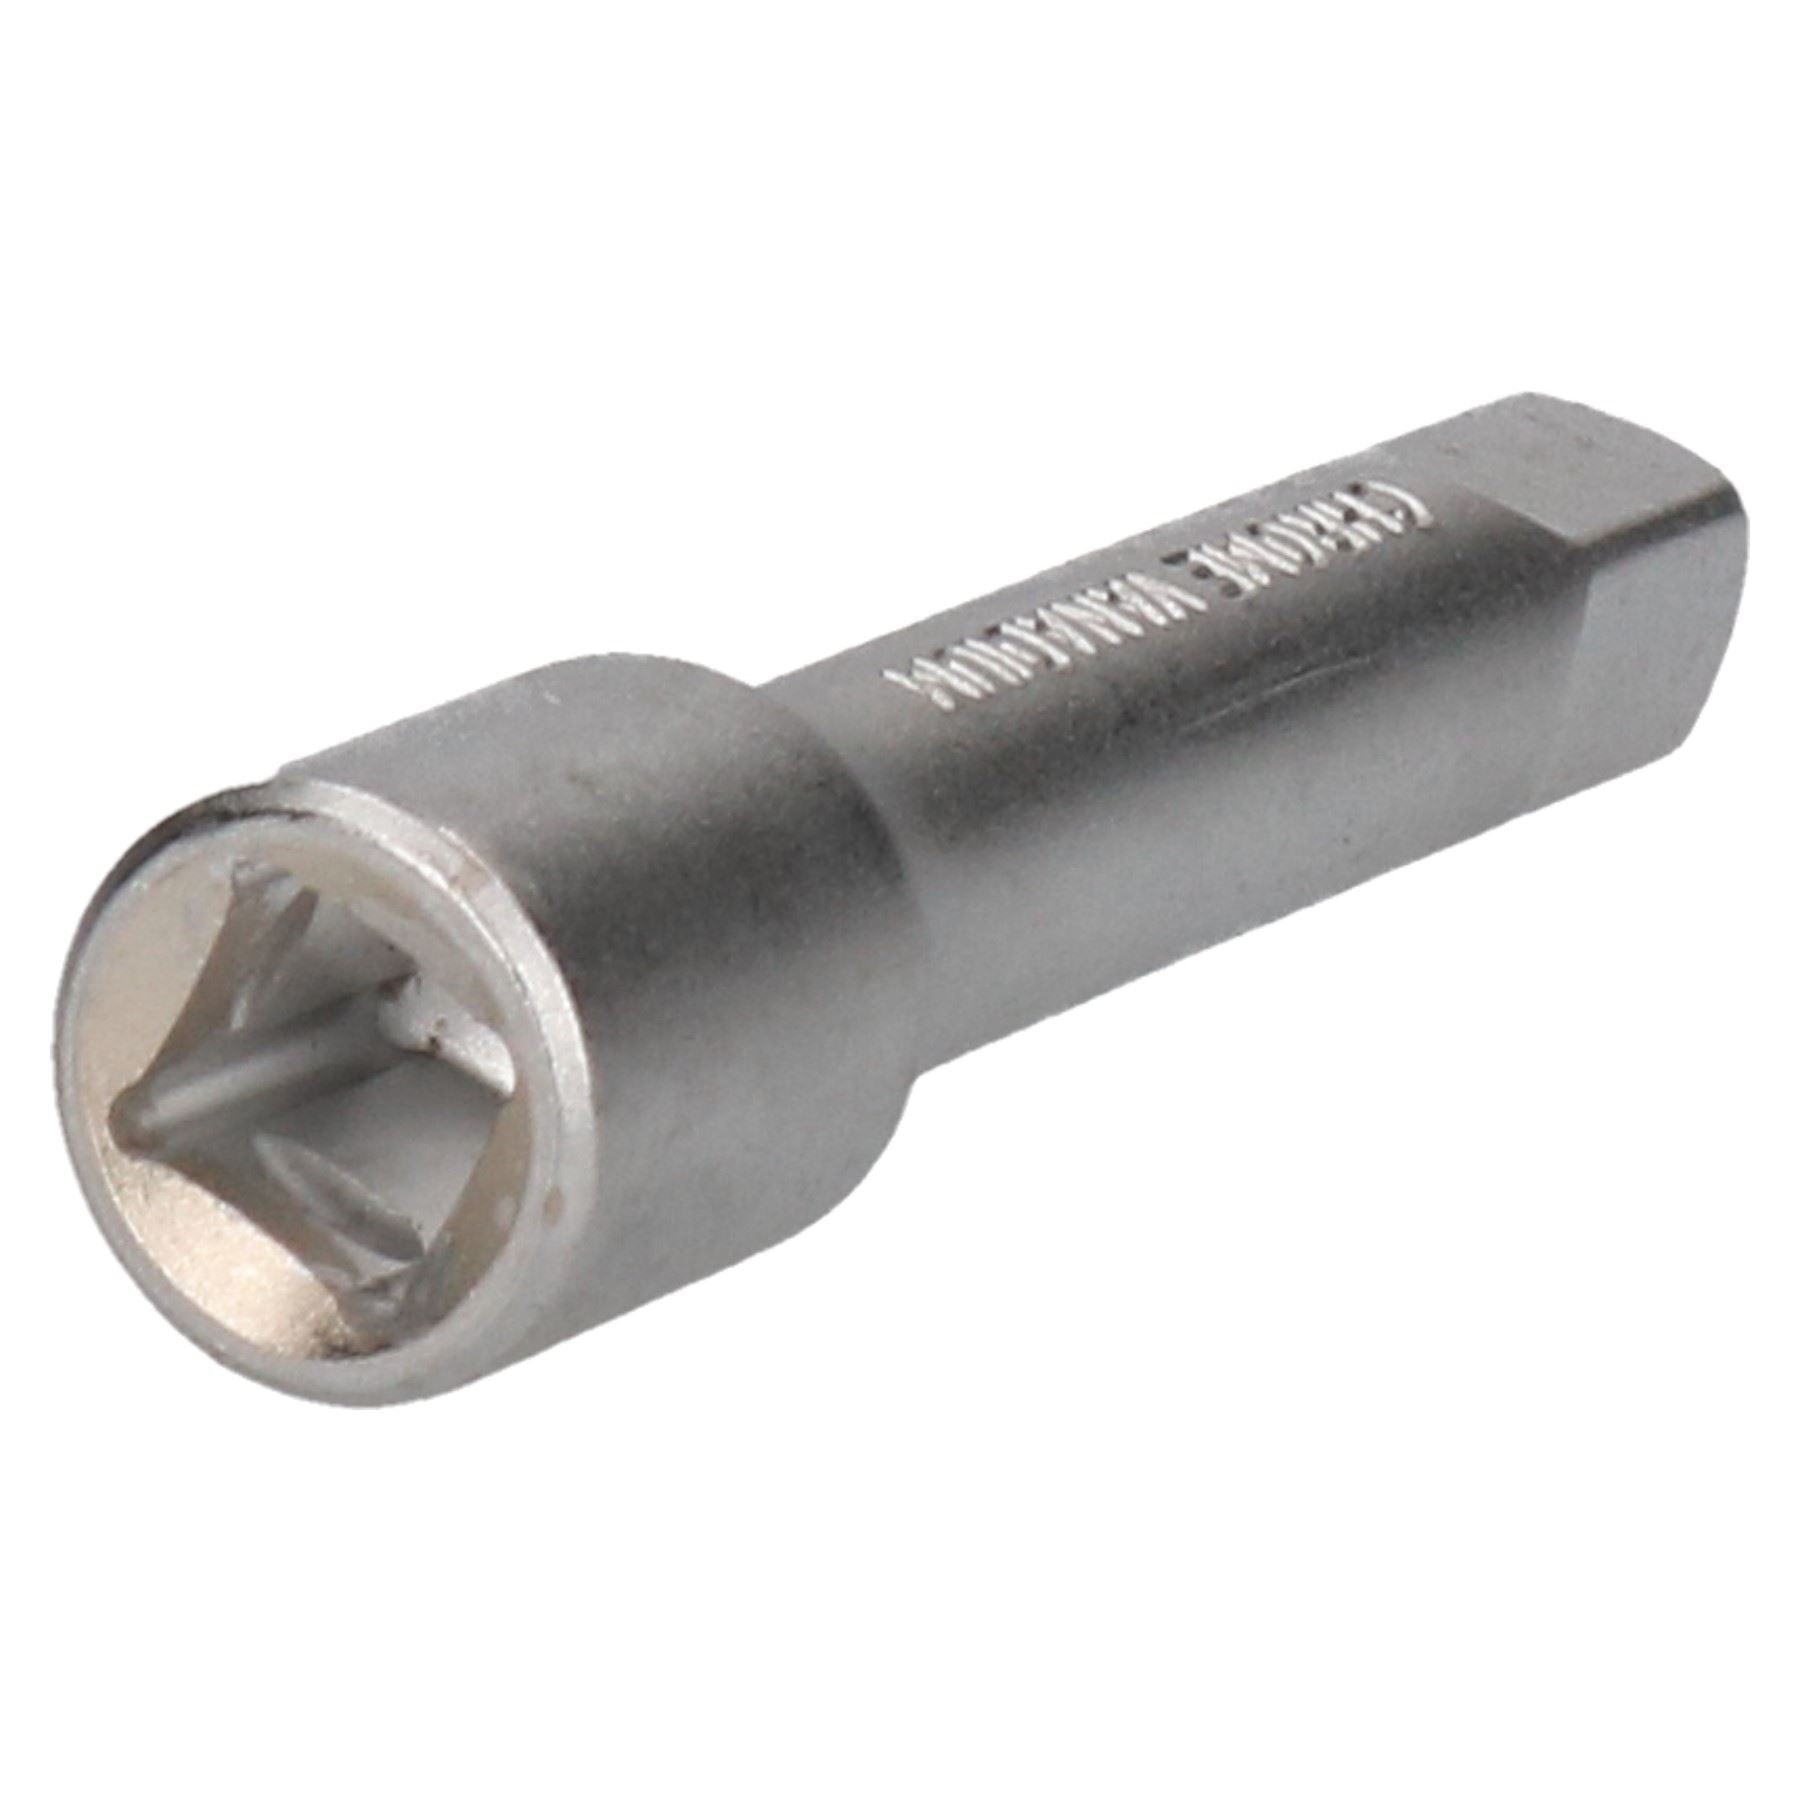 75mm 3/8" Drive Socket Bar Adapter / Adaptor Extension MC77